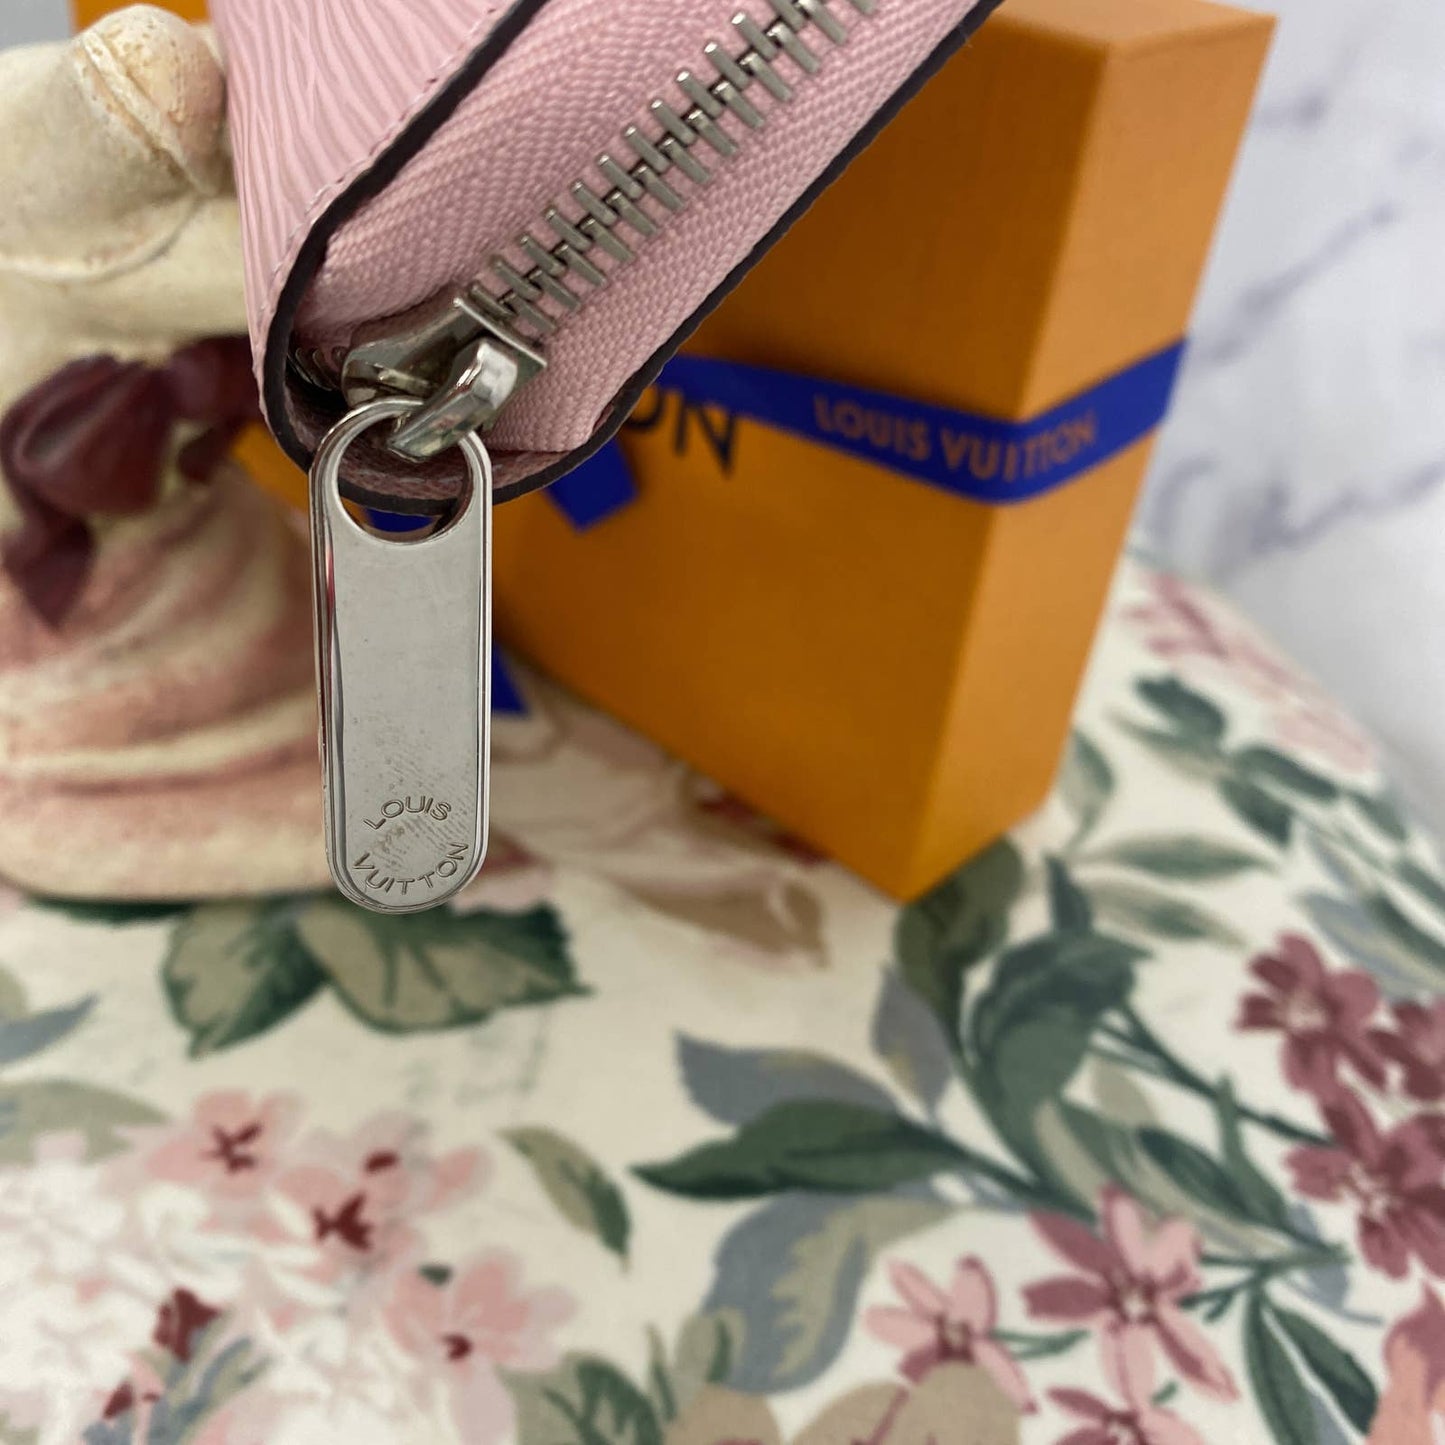 Louis Vuitton | Epi Rose Ballerine Zippy Wallet